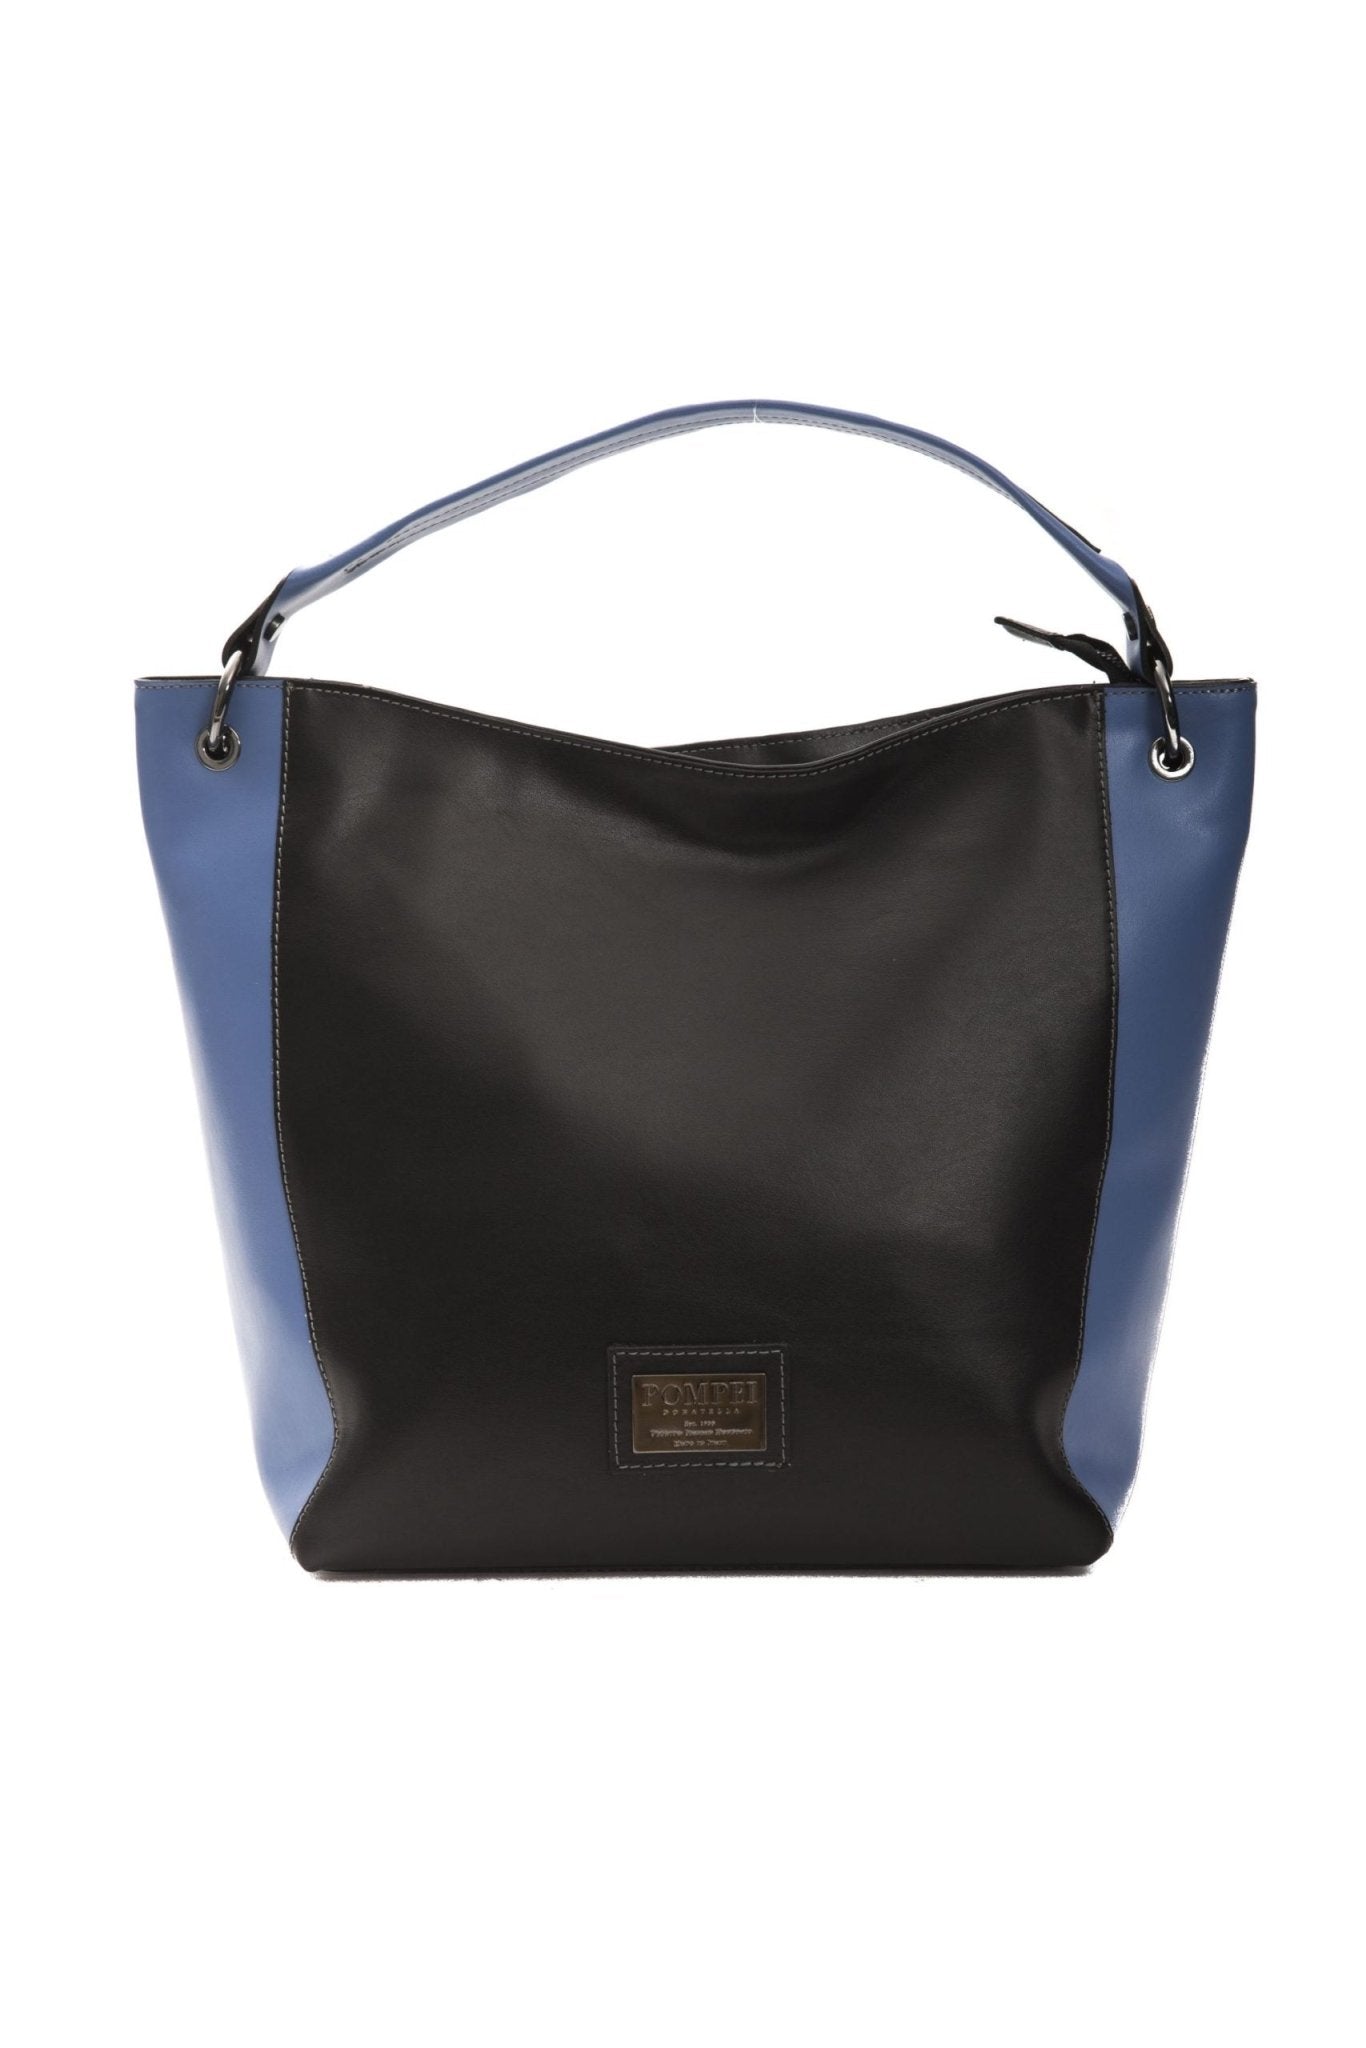 Pompei Donatella Black Leather Shoulder Bag - Fizigo